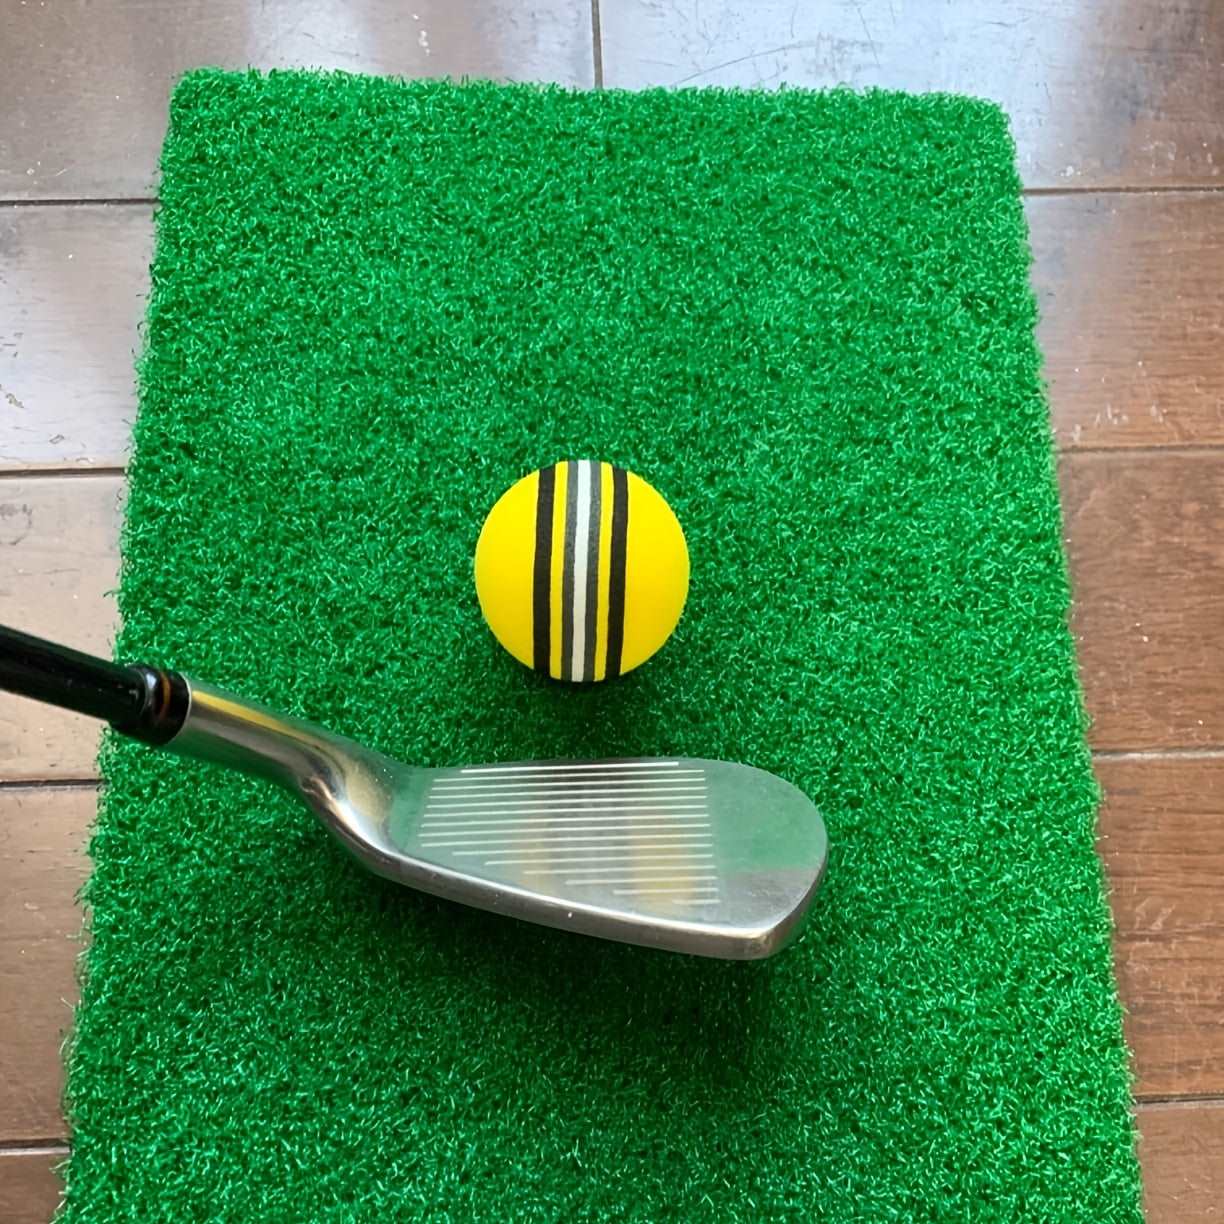 20 Soft Practice Golf Balls